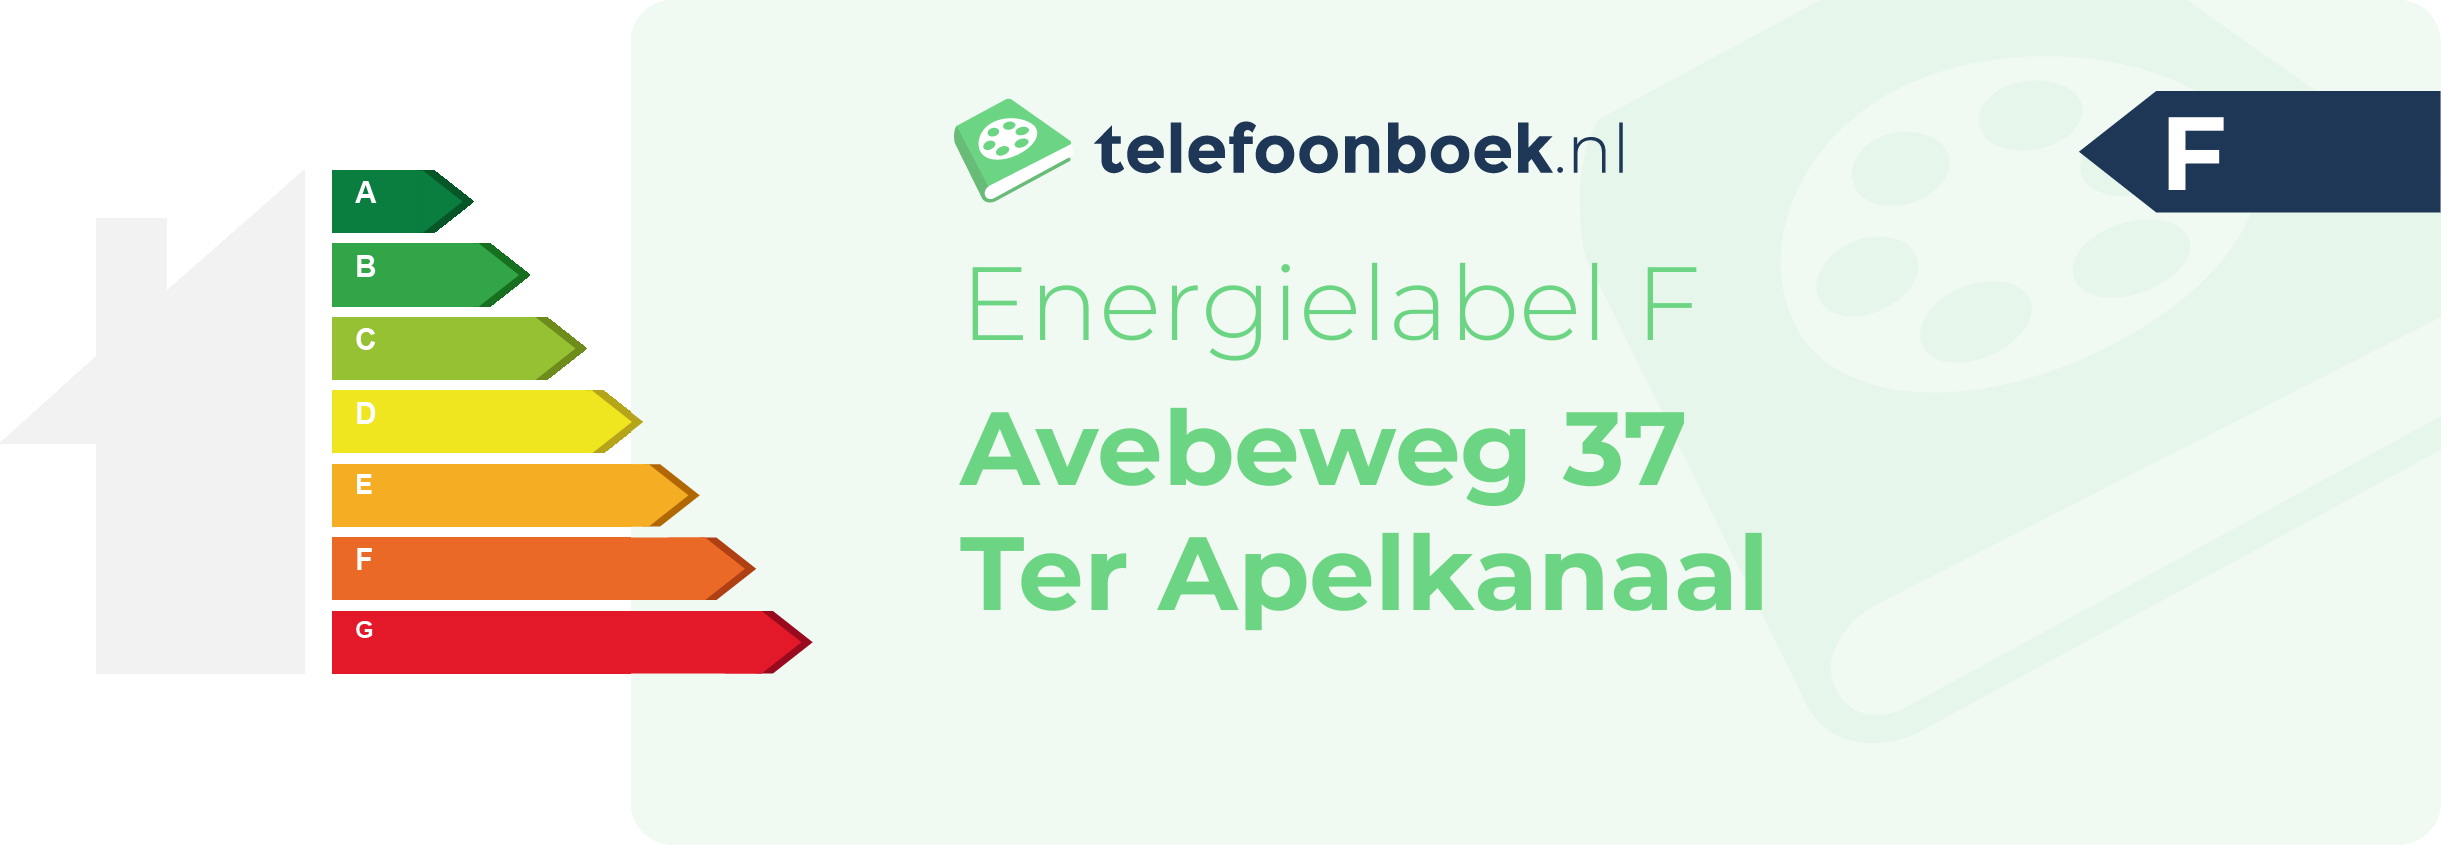 Energielabel Avebeweg 37 Ter Apelkanaal